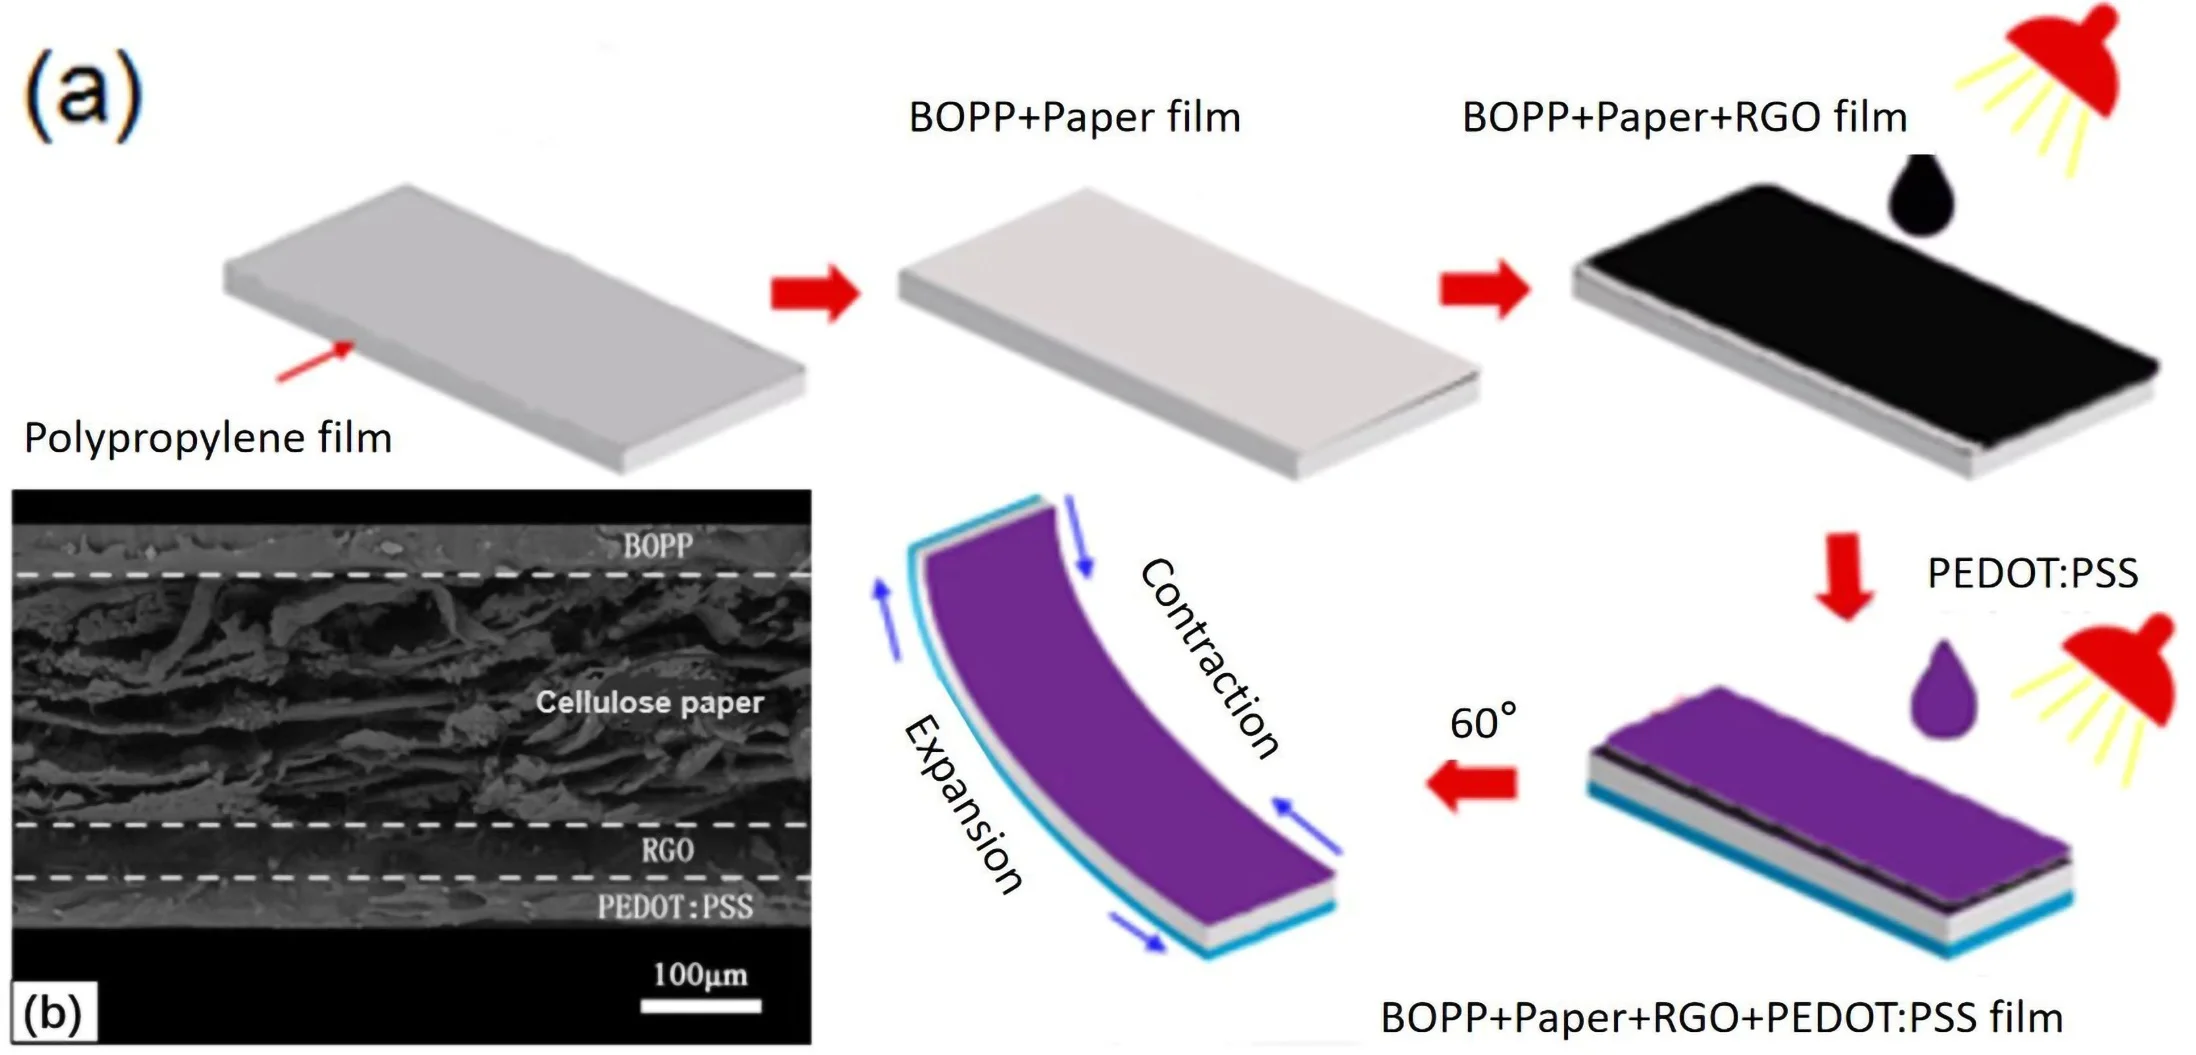 A multiresponsive flexible actuator based on BOPP/paper/RGO/PEDOT: PSS composites